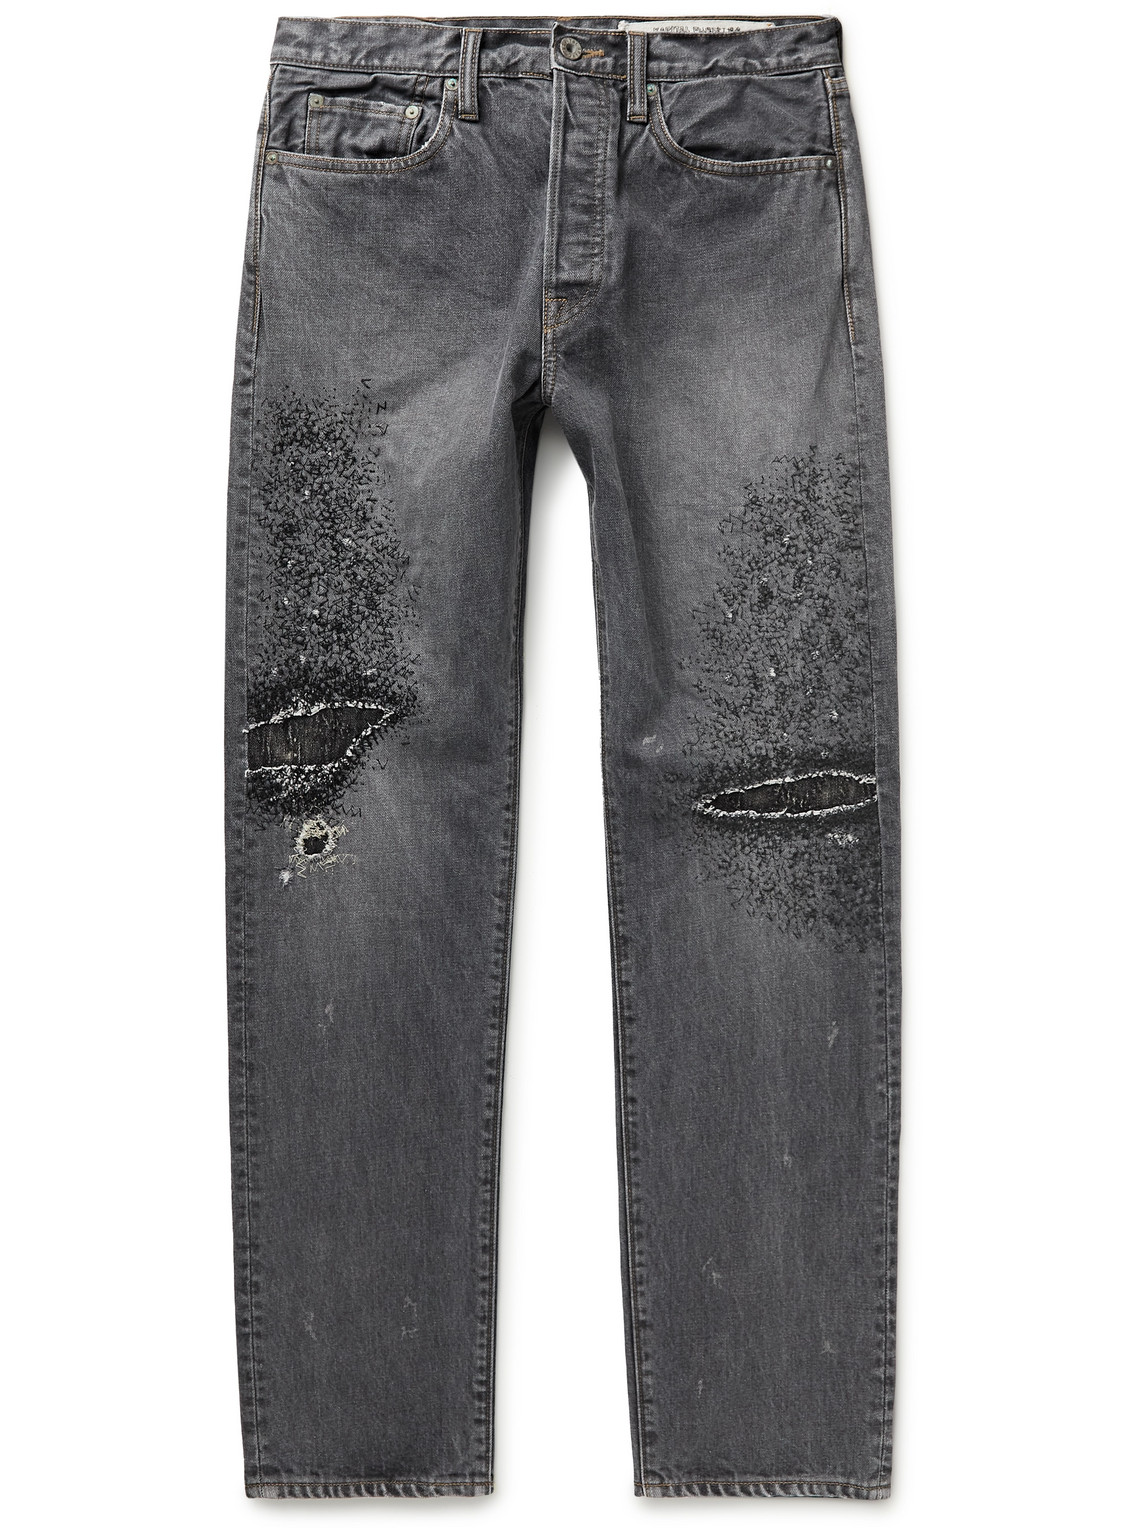 KAPITAL - Monkey CISCO Distressed Denim Jeans - Men - Black - UK/US 30 de  Hombres